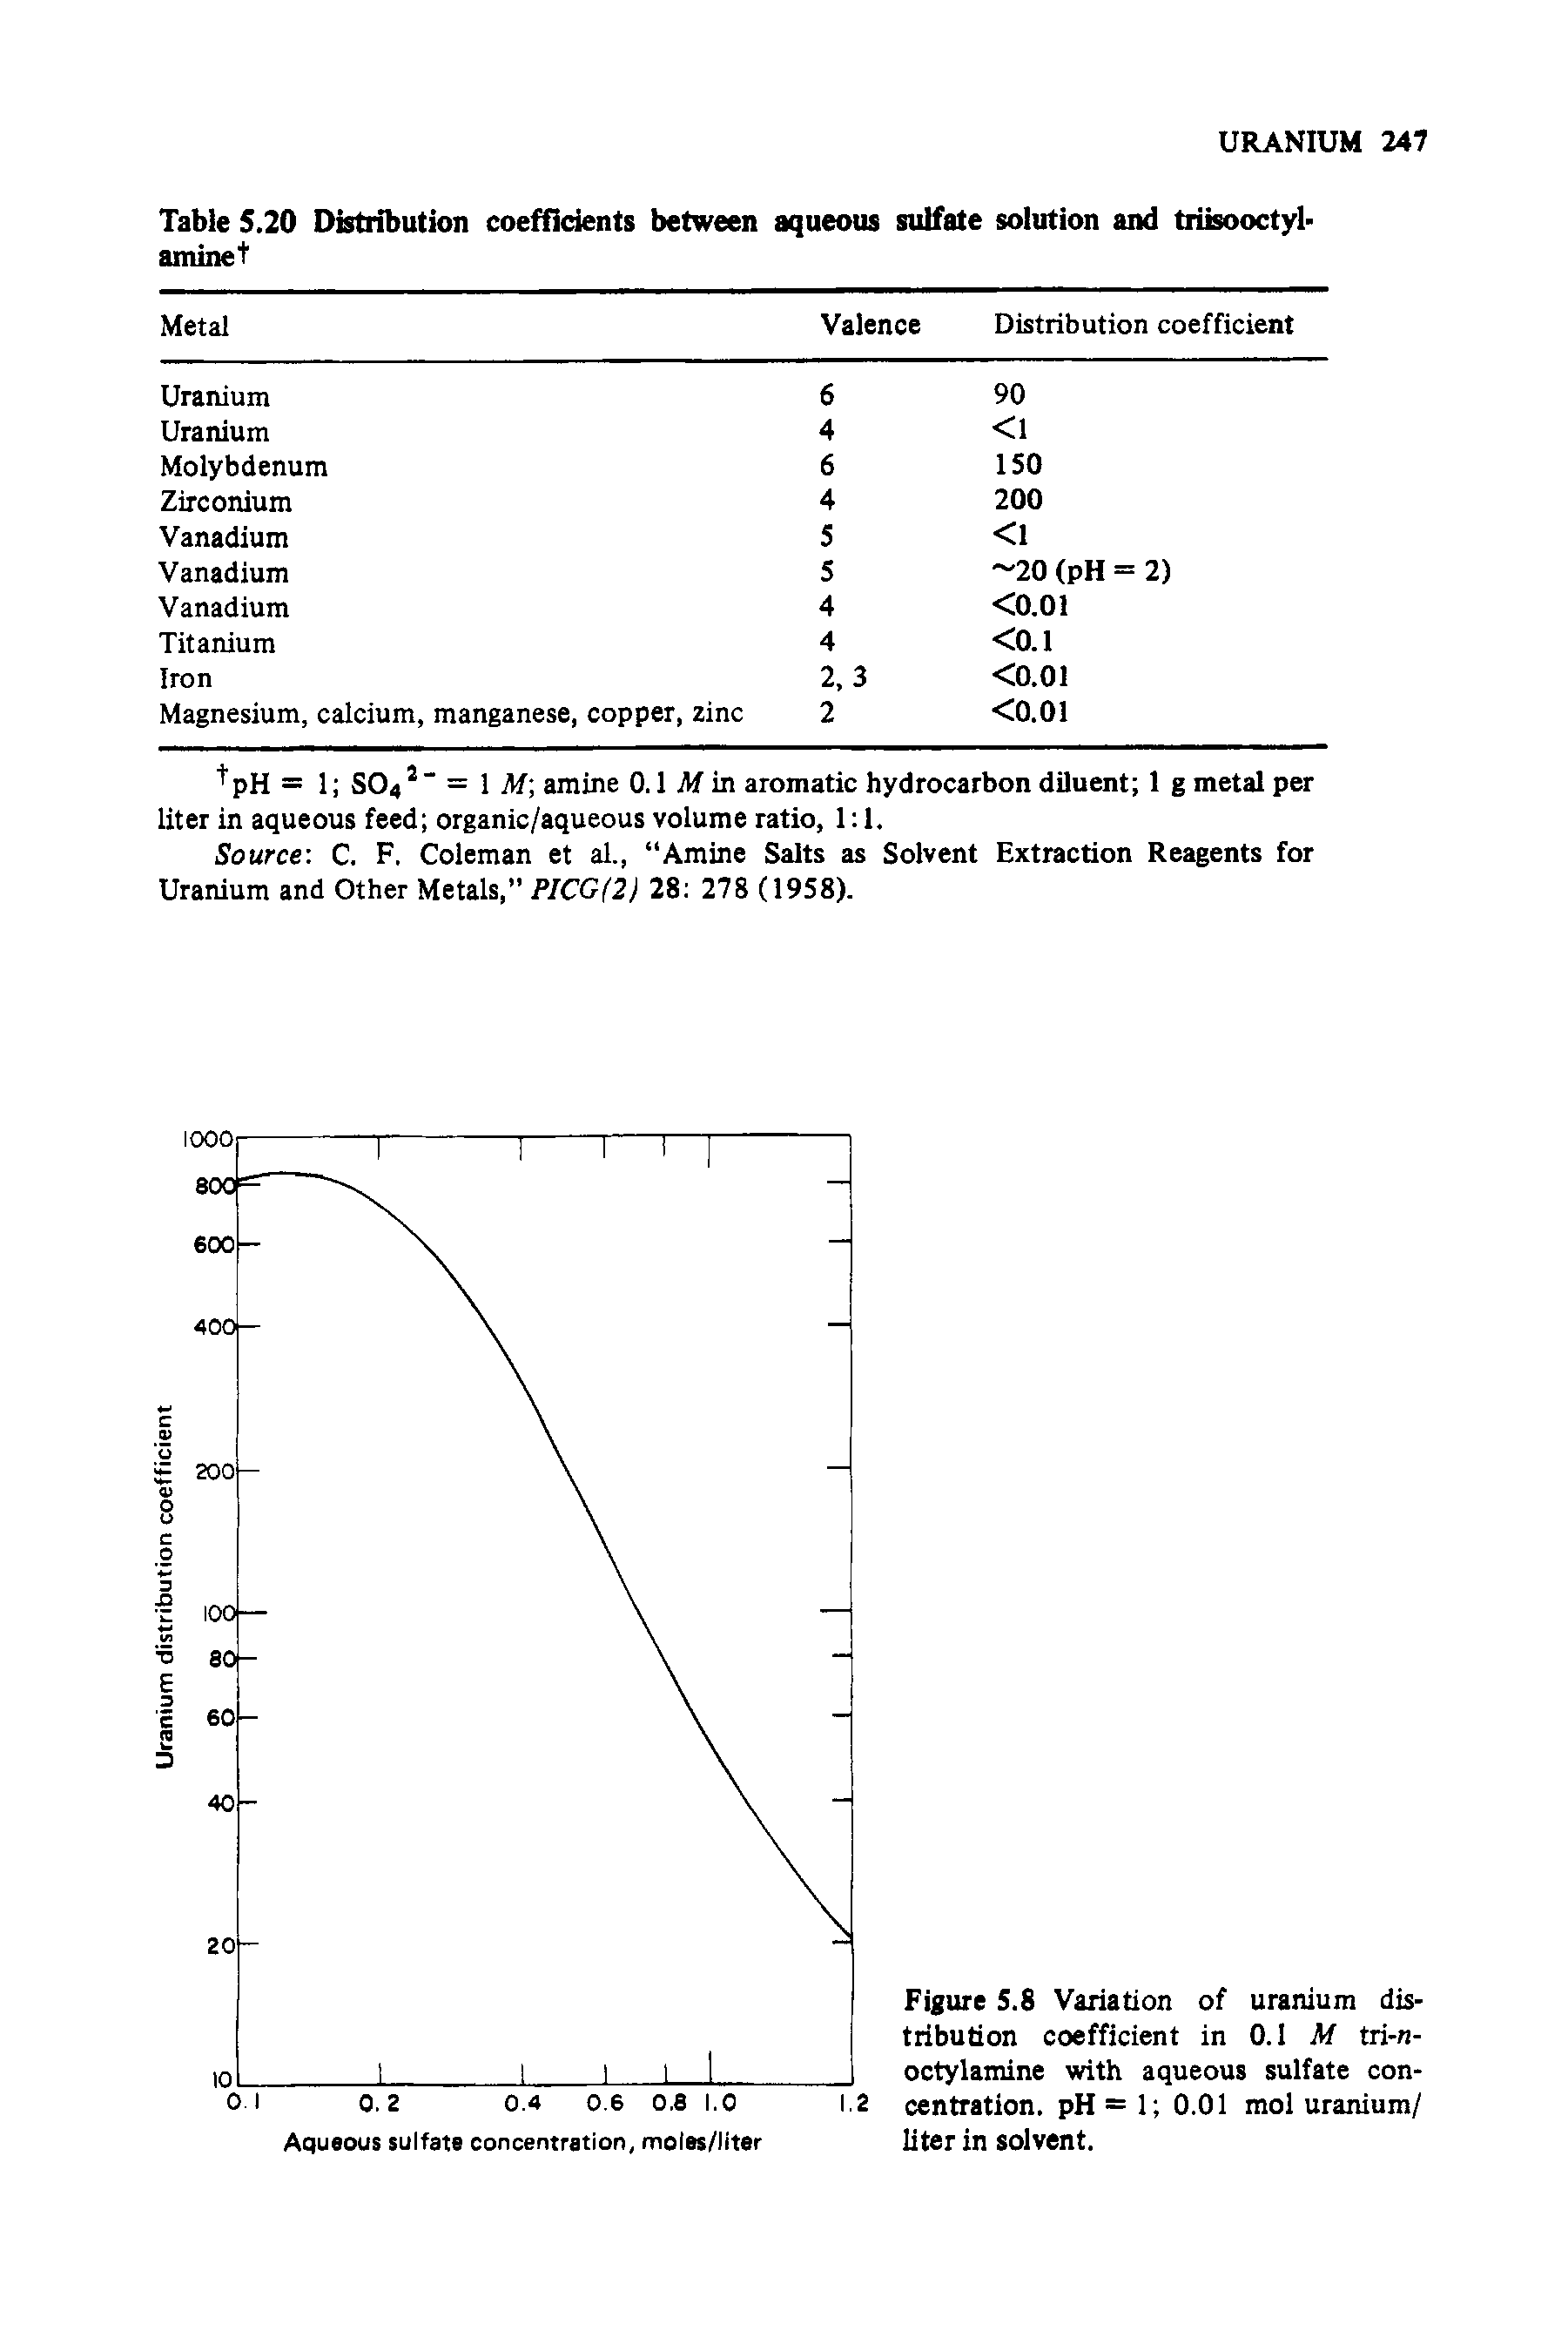 Figure 5.8 Variation of uranium distribution coefficient in 0.1 M tri-n-octylamine with aqueous sulfate concentration. pH = 1 0.01 mol uranium/ liter in solvent.